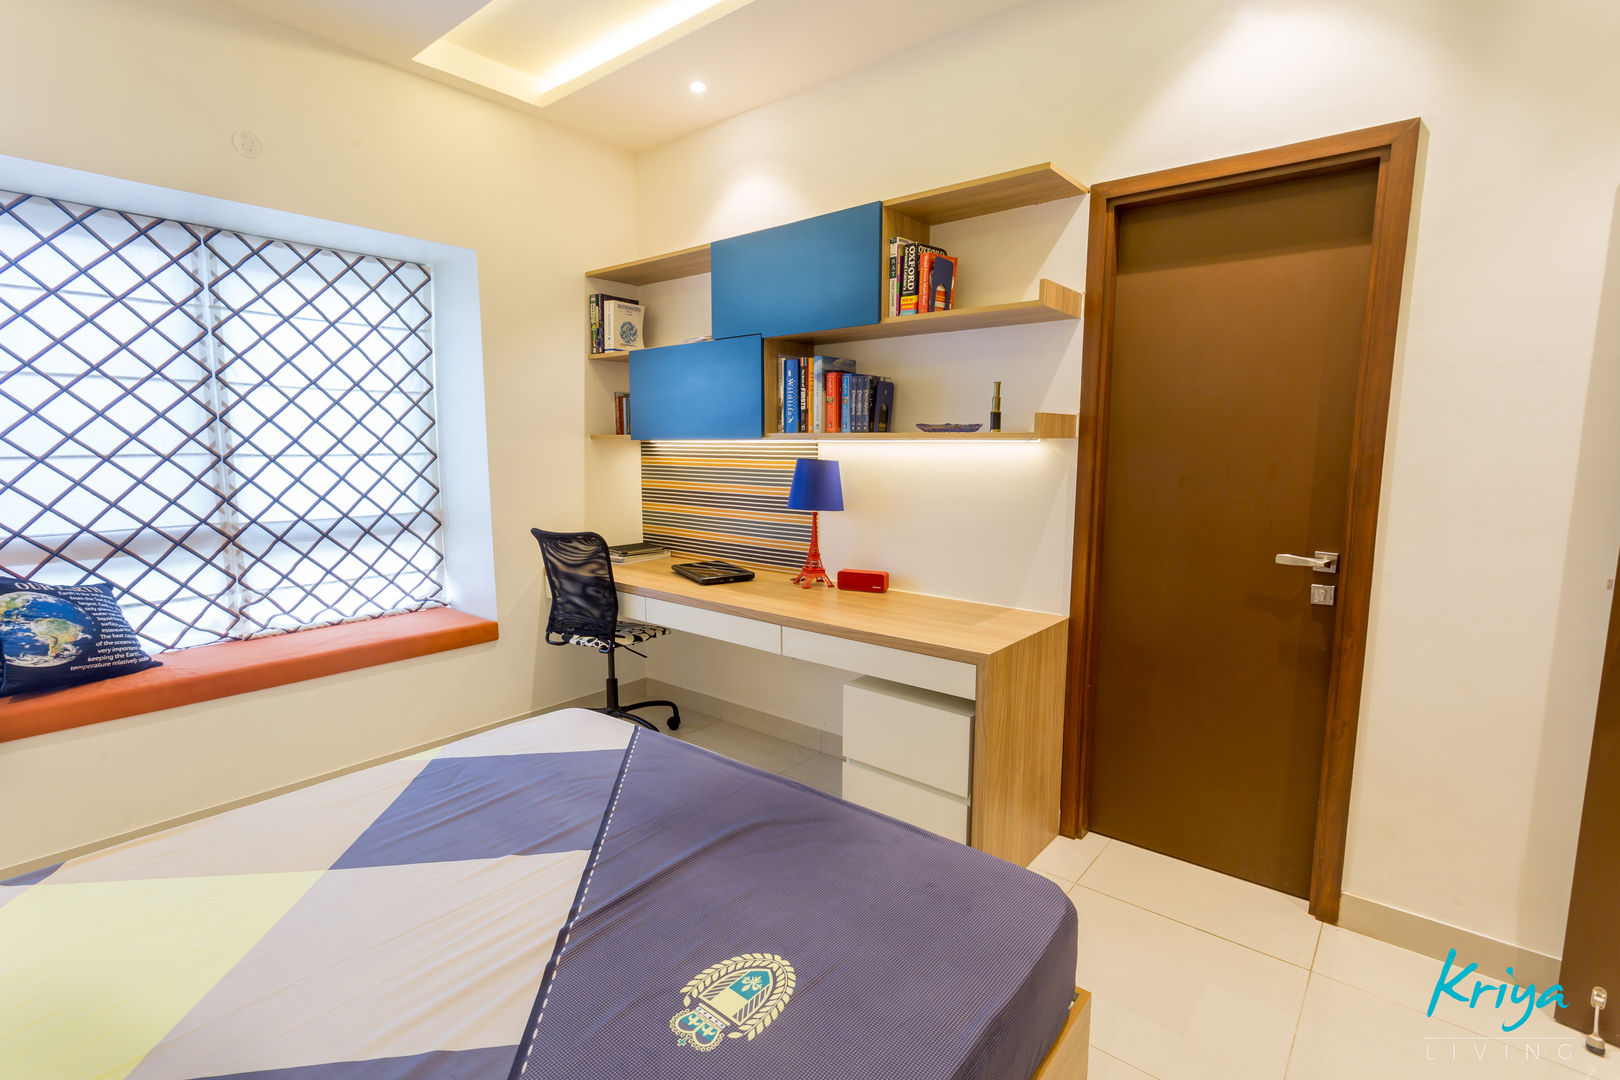 3 BHK apartment - RMZ Galleria, Bengaluru, KRIYA LIVING KRIYA LIVING Dormitorios modernos